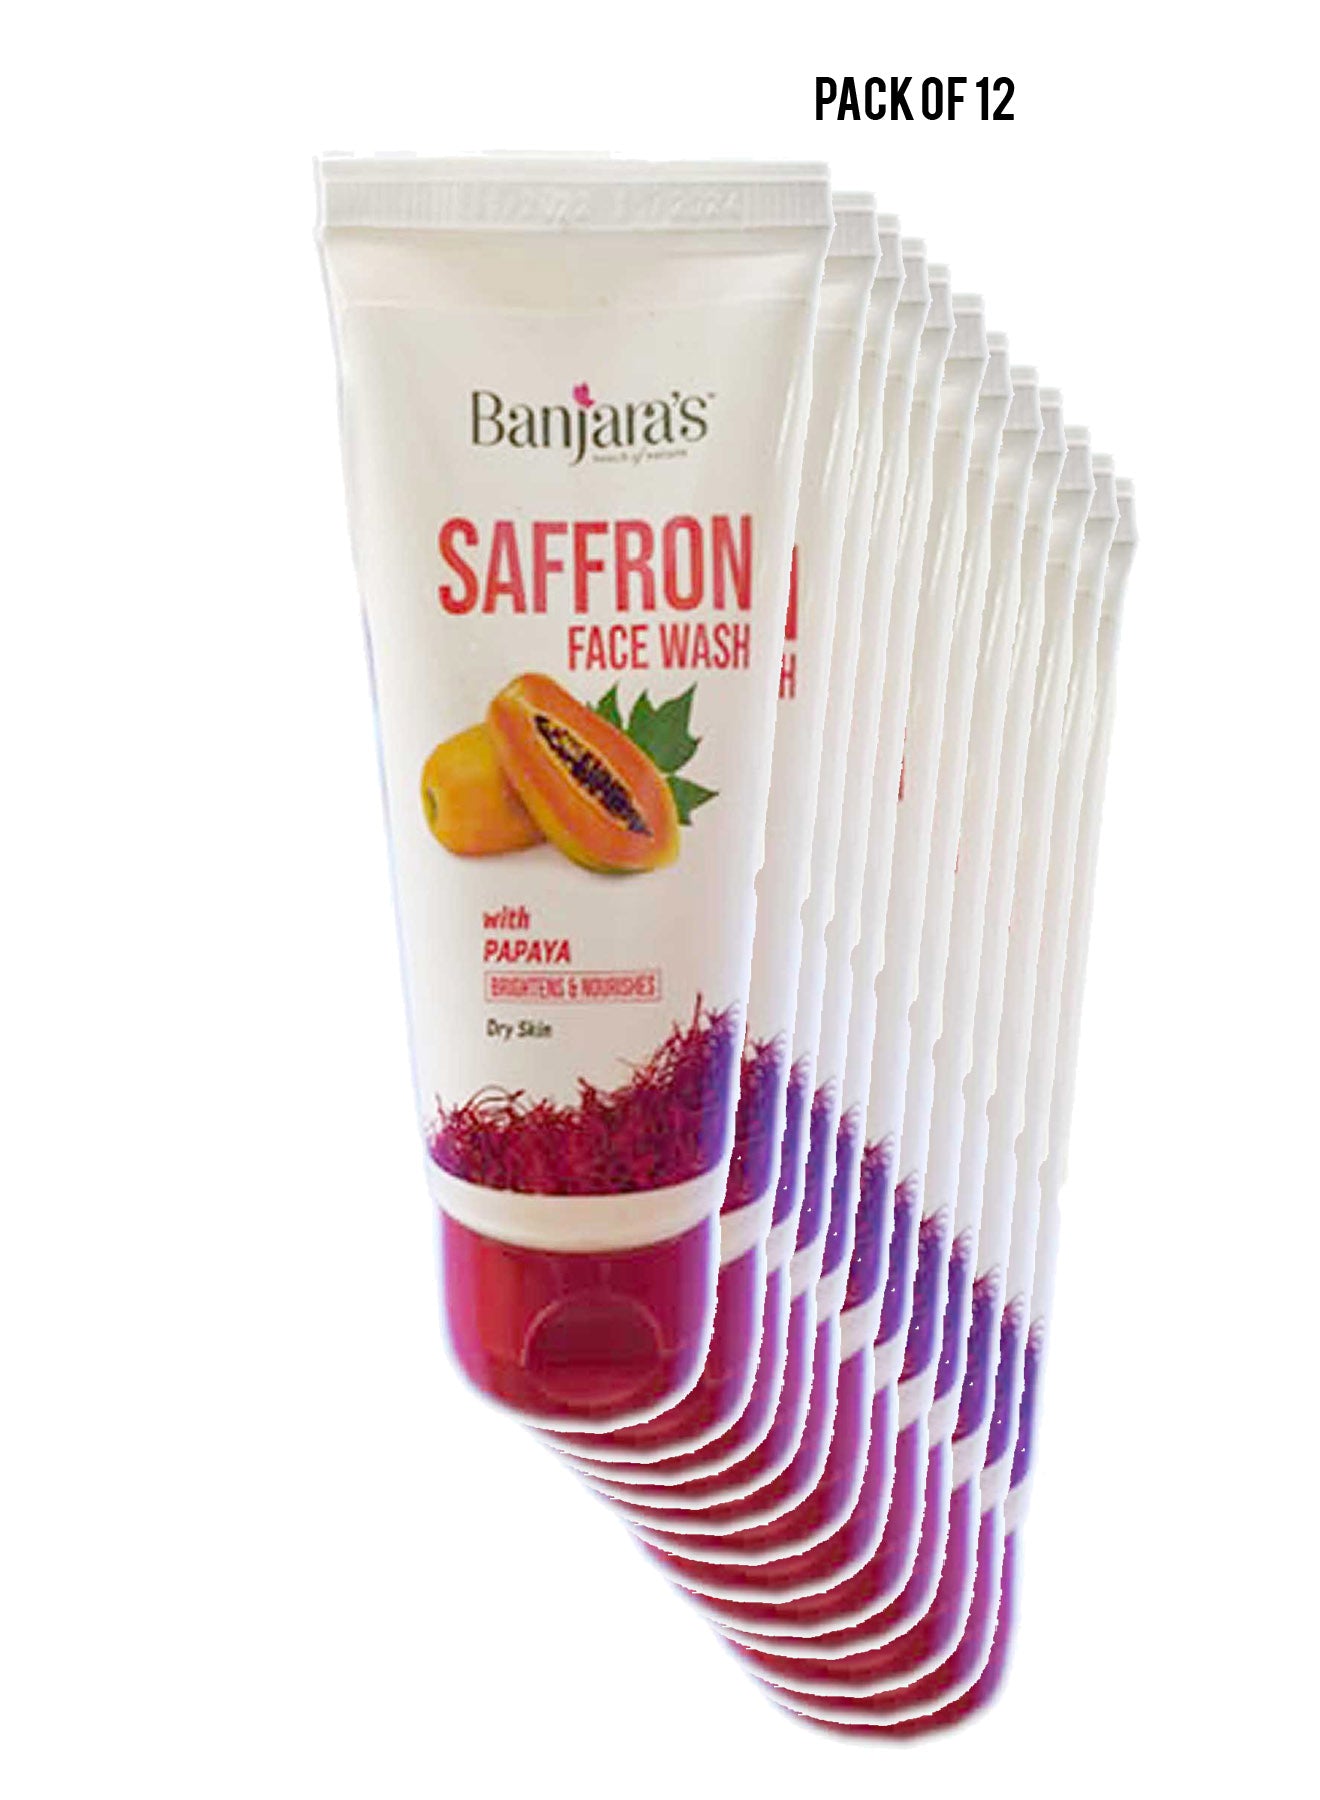 Banjaras Saffron Face wash with Papaya 50ml Value Pack of 12 